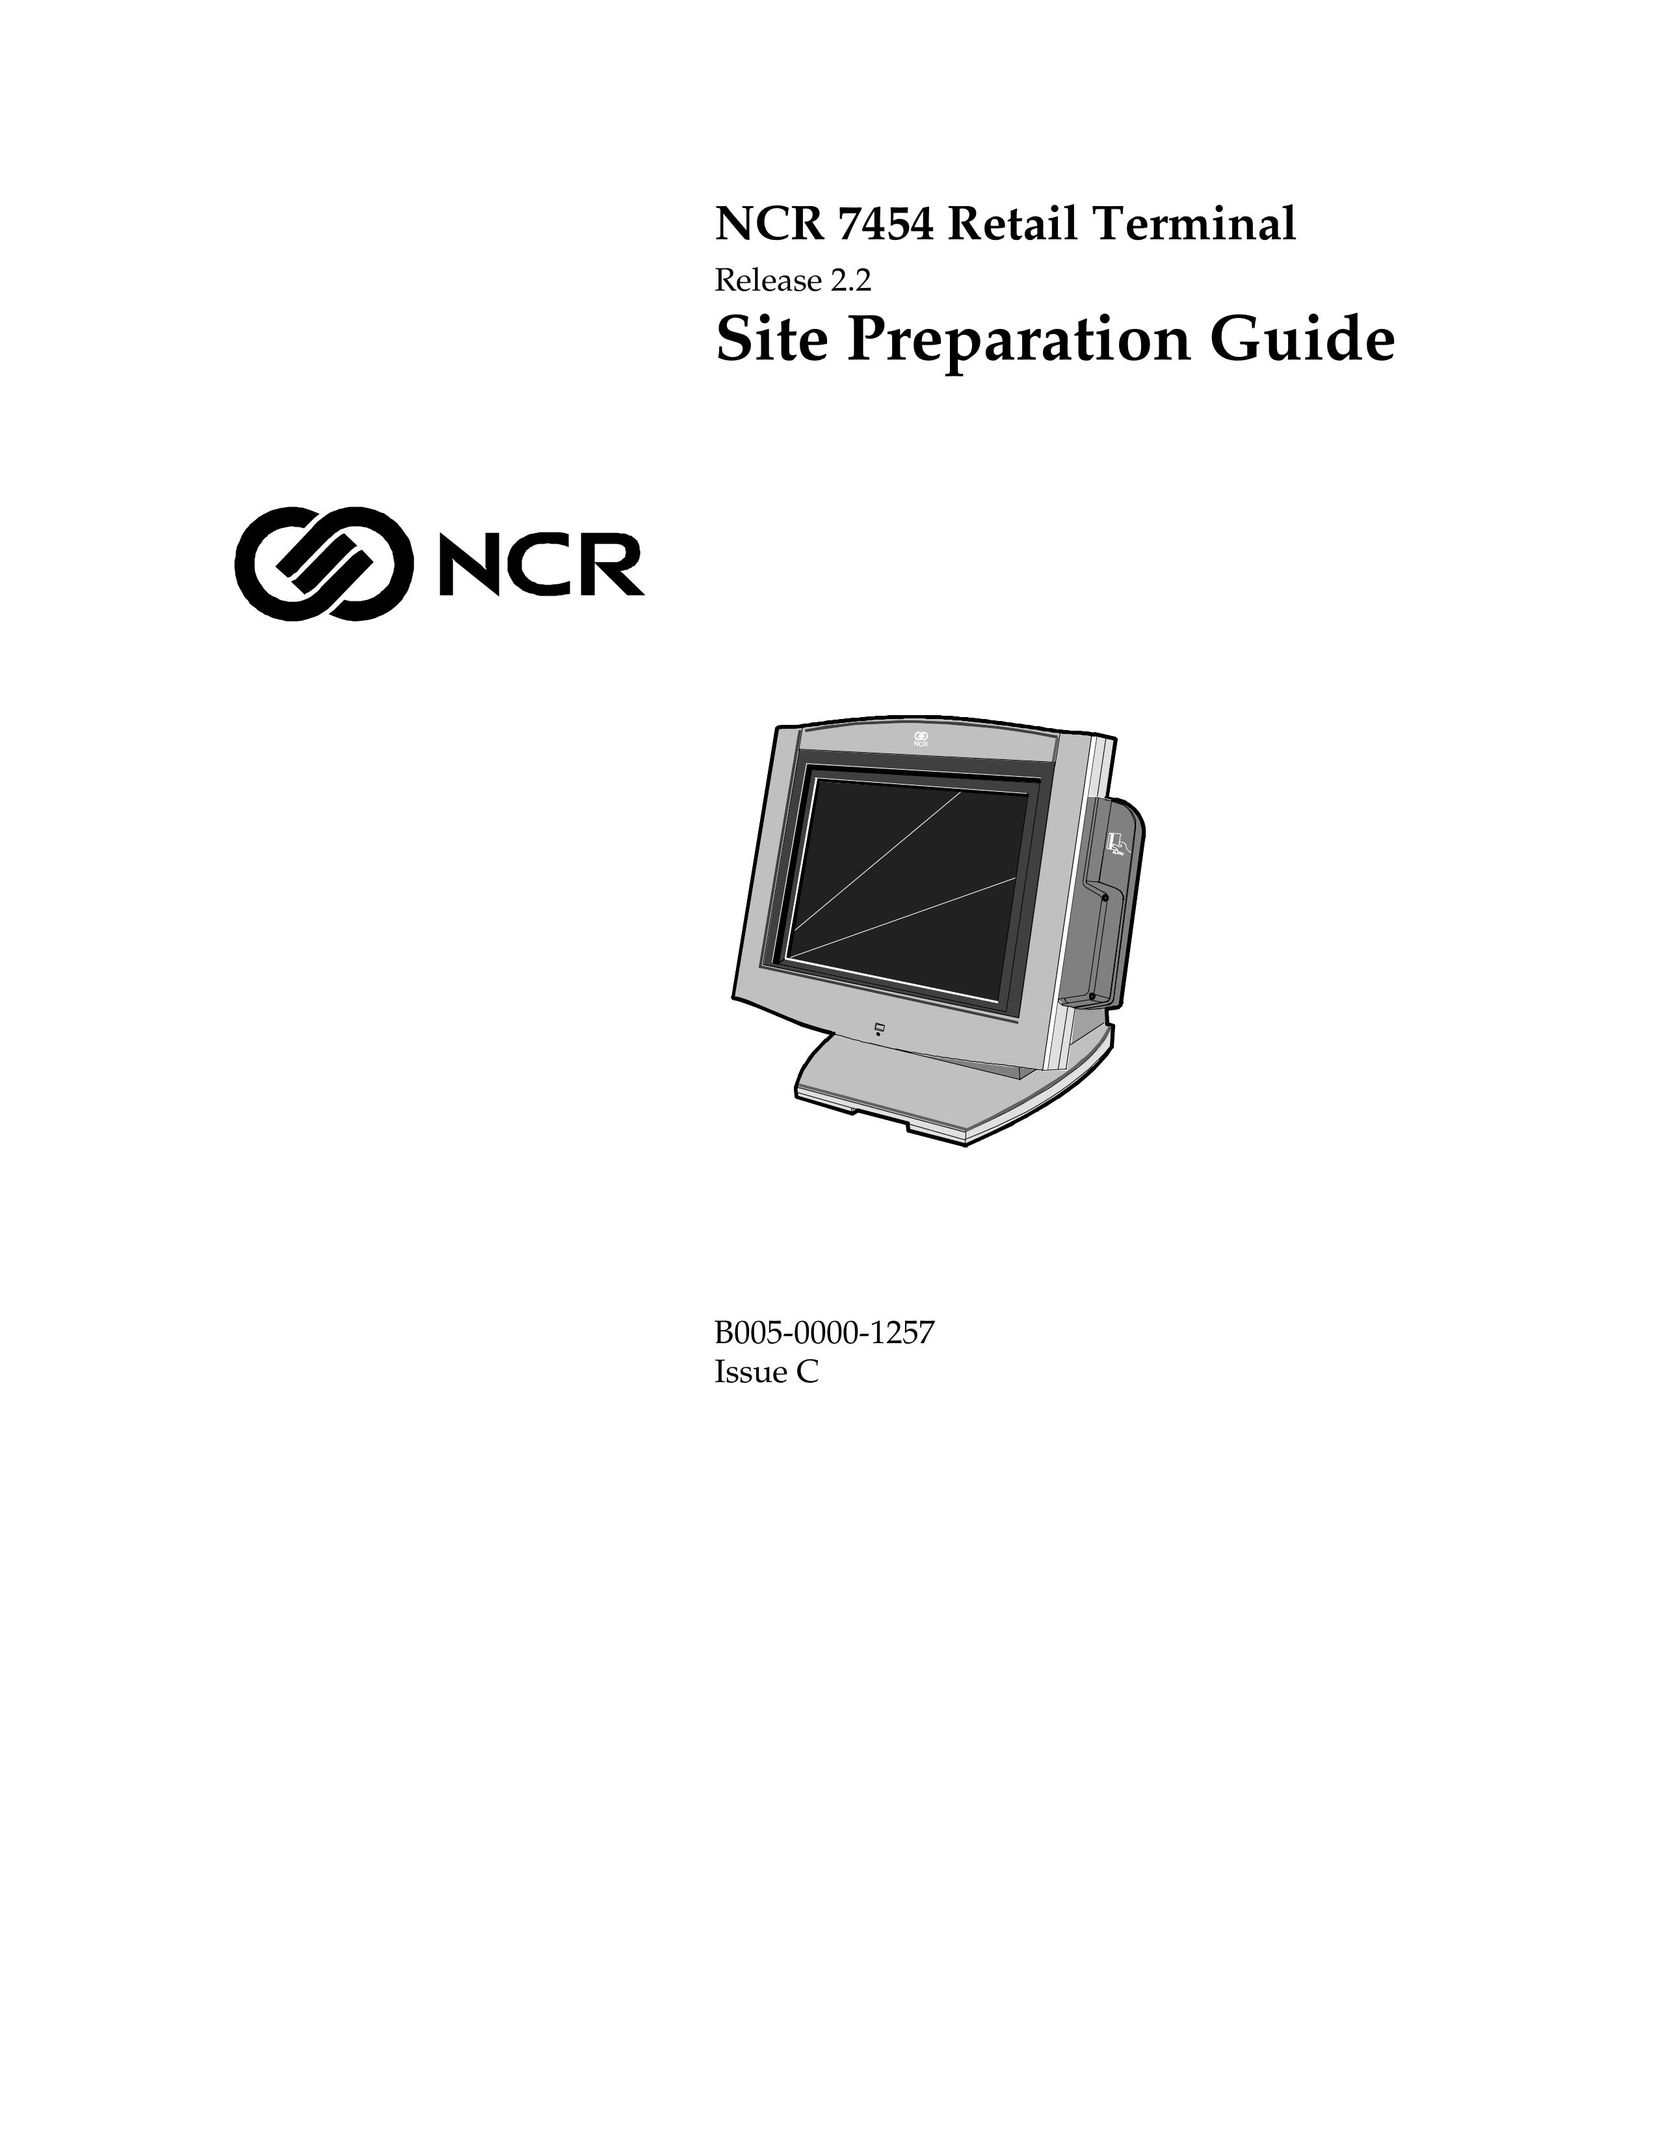 NCR NCR7454 Credit Card Machine User Manual